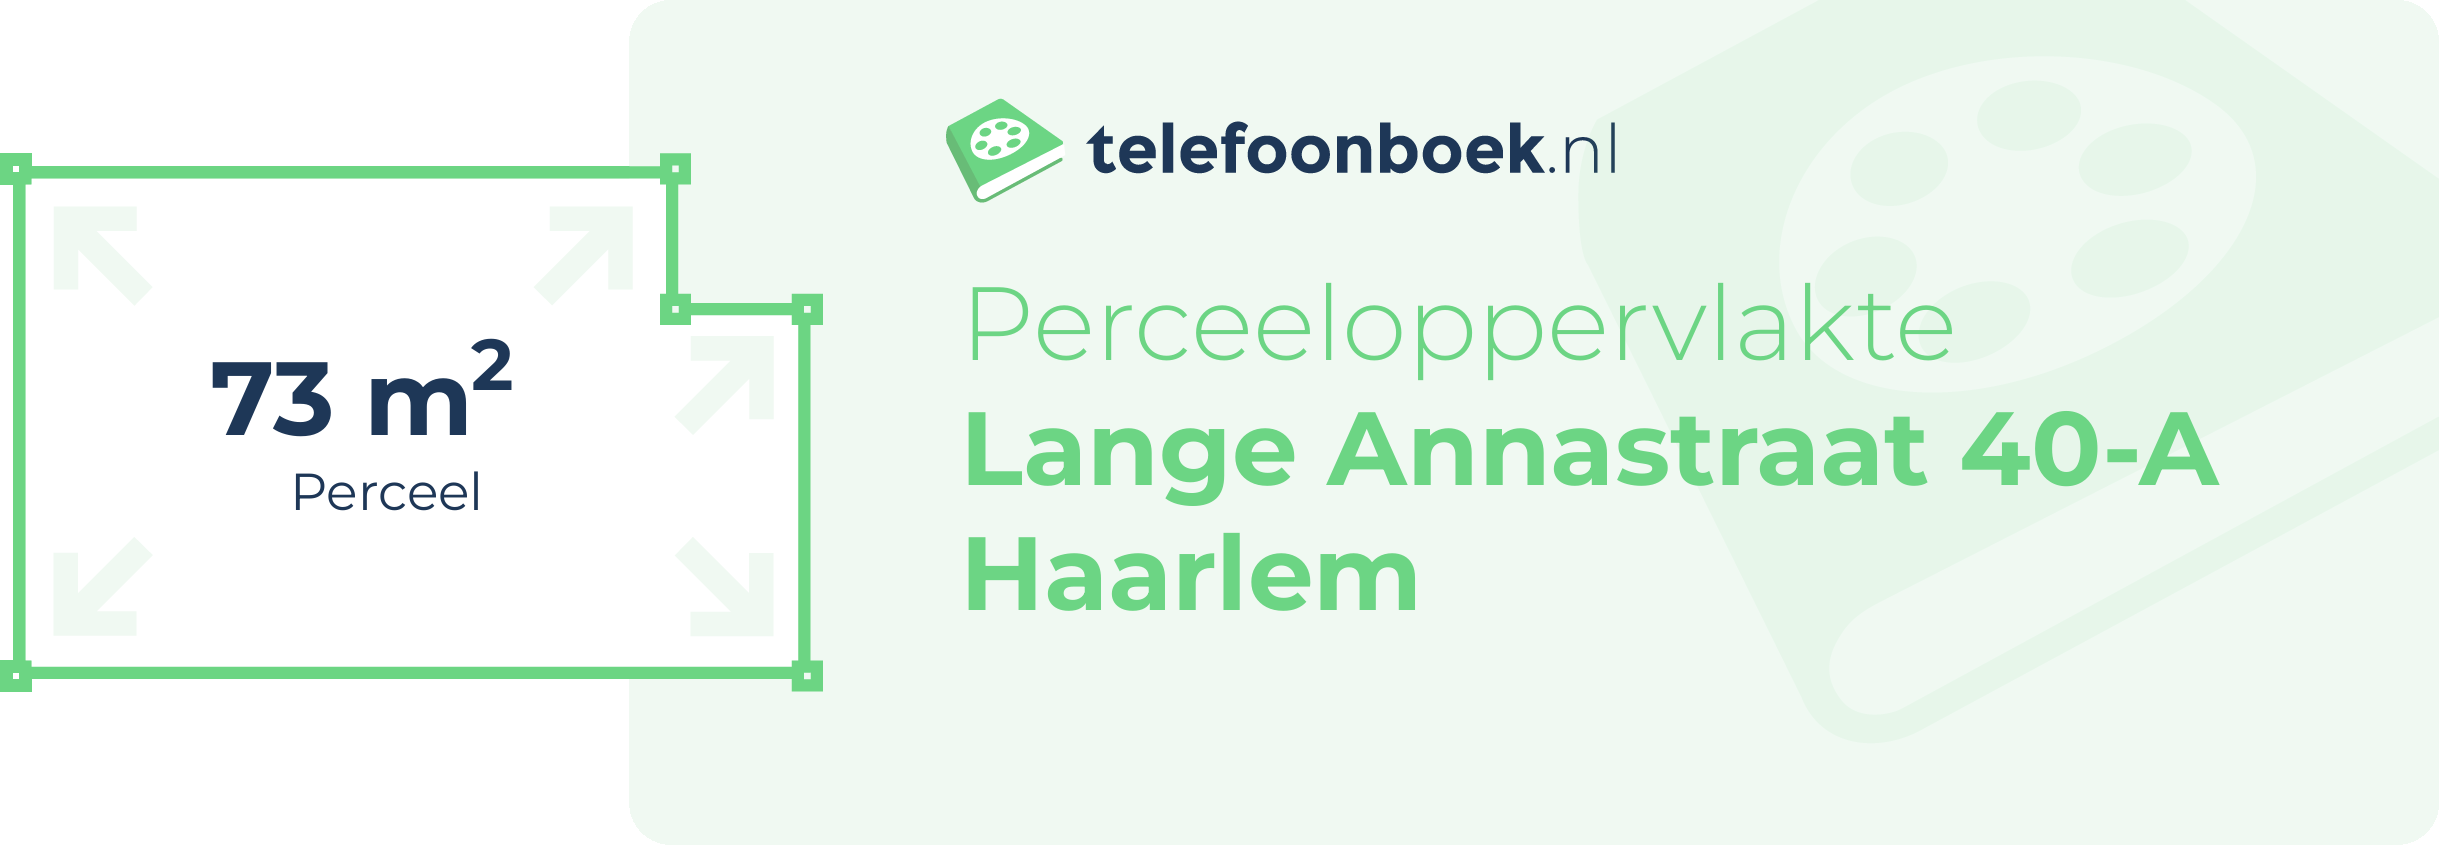 Perceeloppervlakte Lange Annastraat 40-A Haarlem